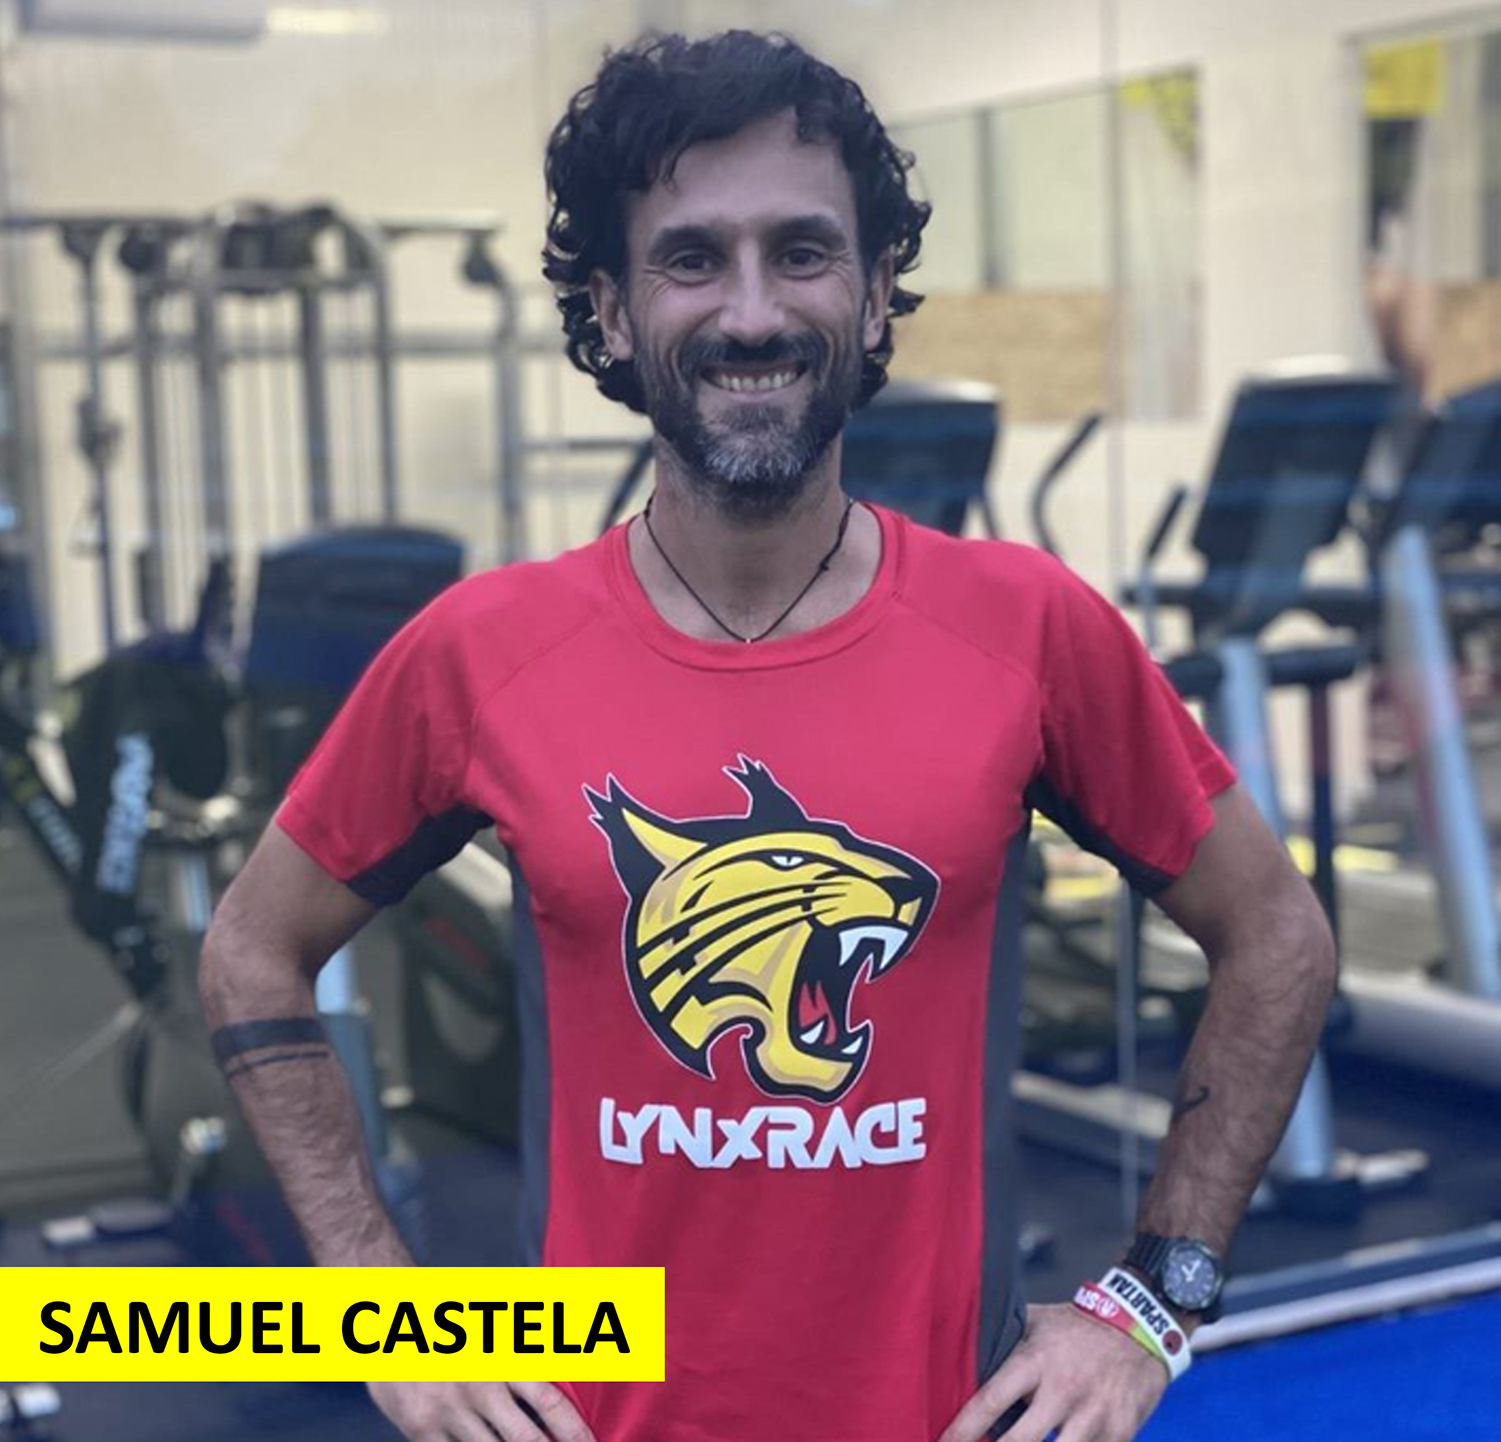 SAMUEL CASTELA